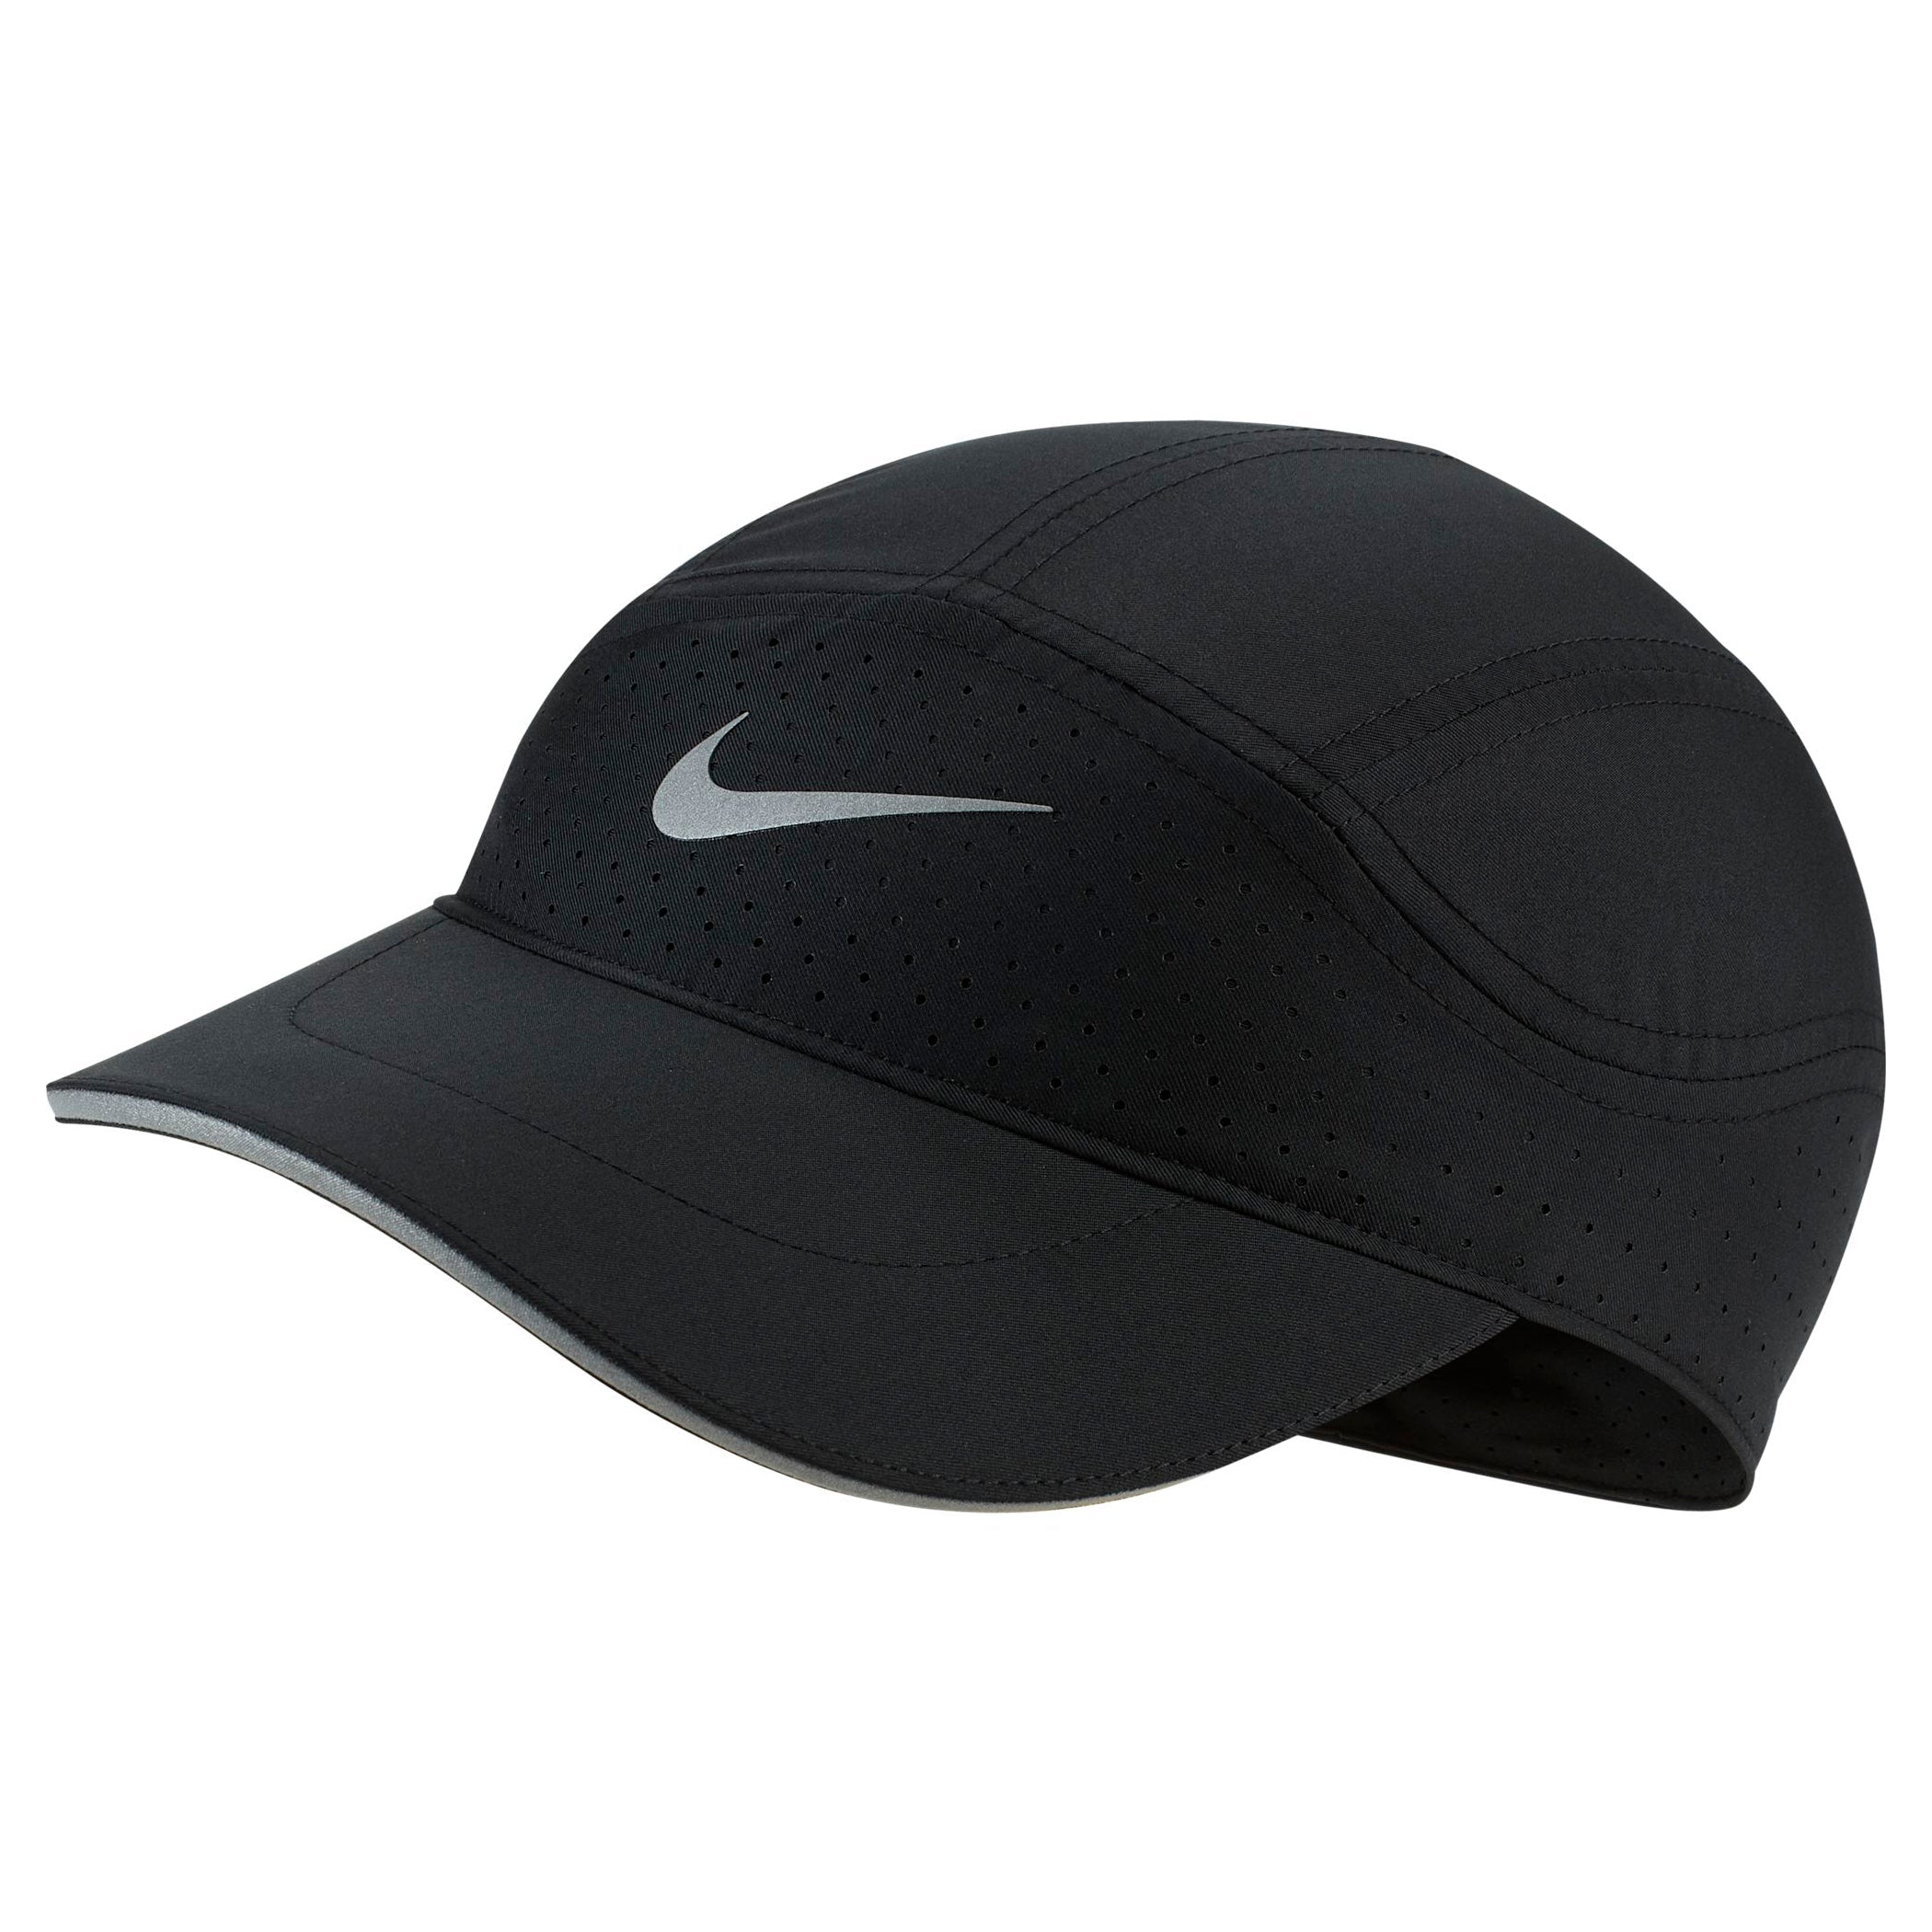 Nike AeroBill Tailwind Running Cap.